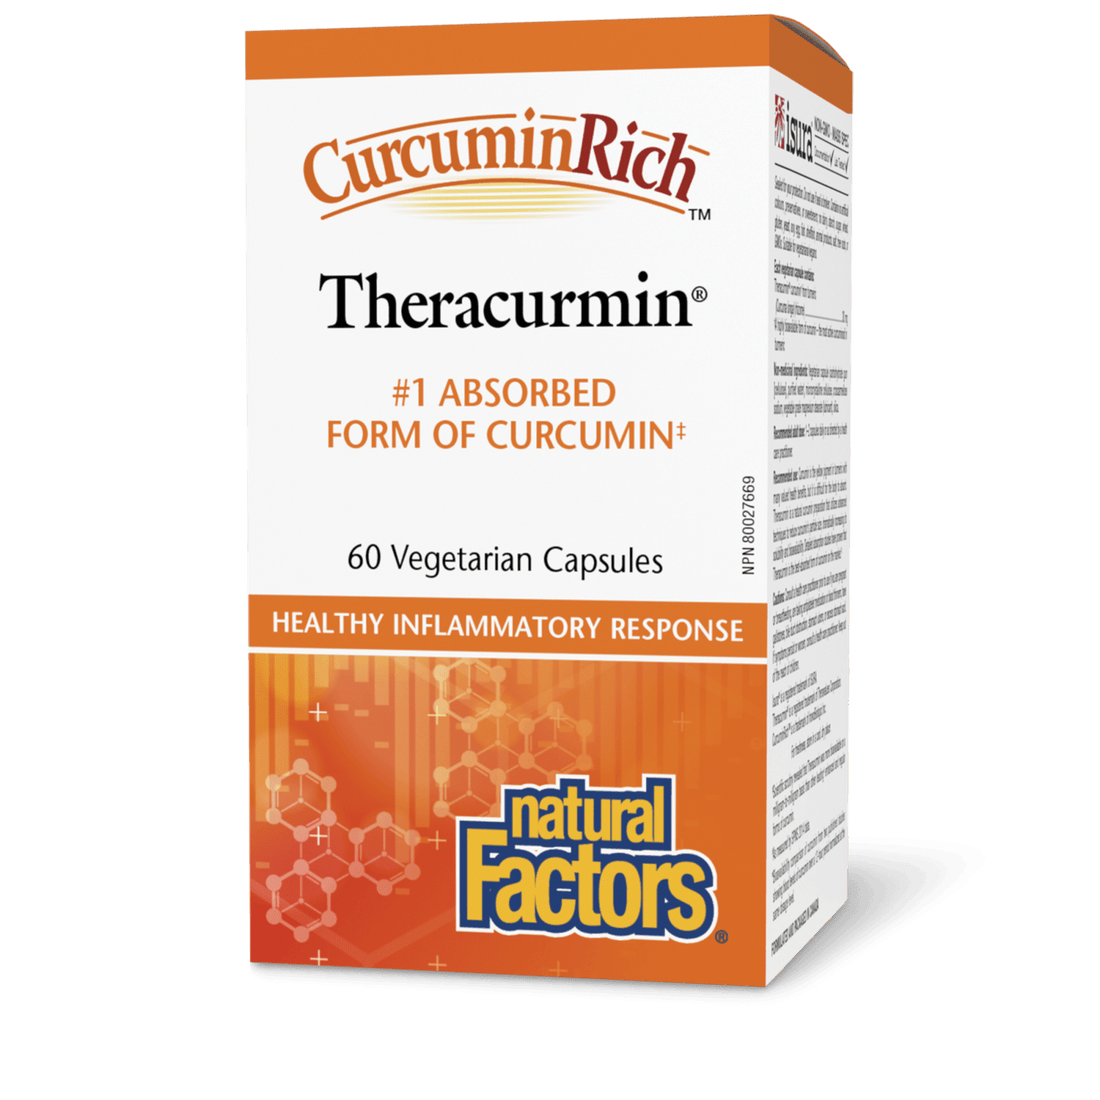 Natural Factors CurcuminRich Theracurmin 30mg (60 Vegetarian Capsules)